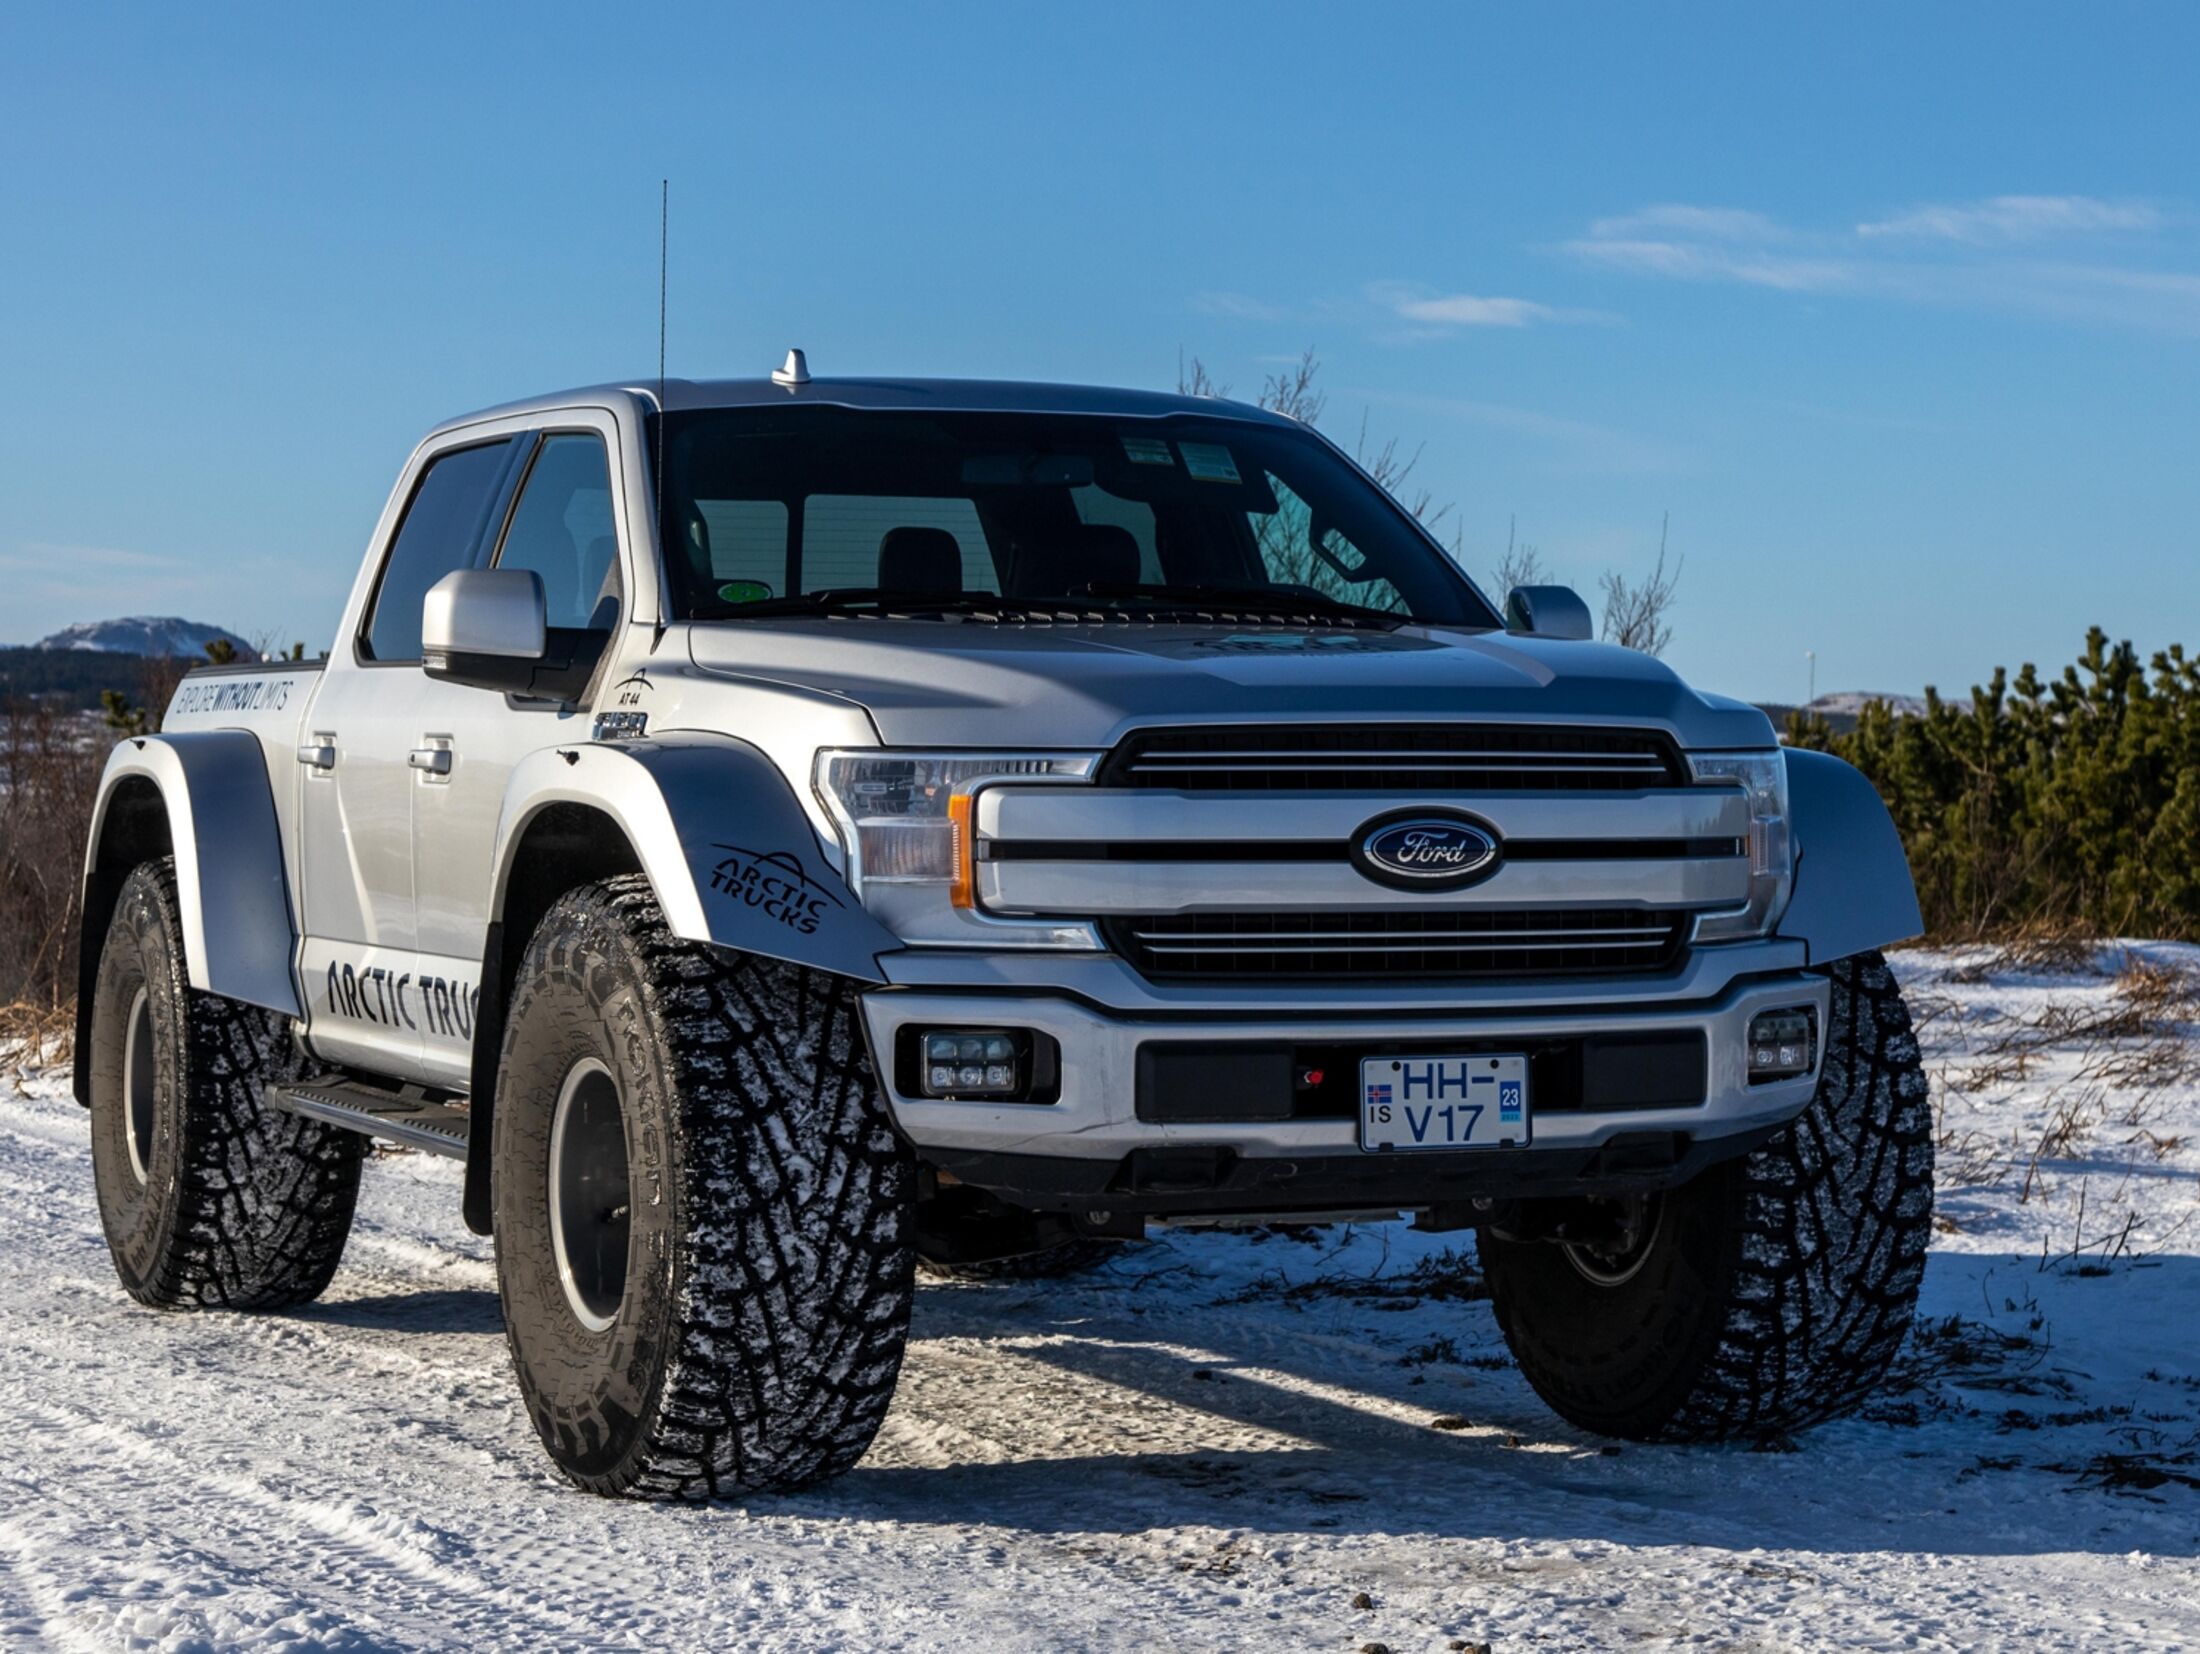 https://imgr1.auto-motor-und-sport.de/Ford-F-150-AT-44-Arctic-Trucks-jsonLd4x3-18bd6146-1713645.jpg